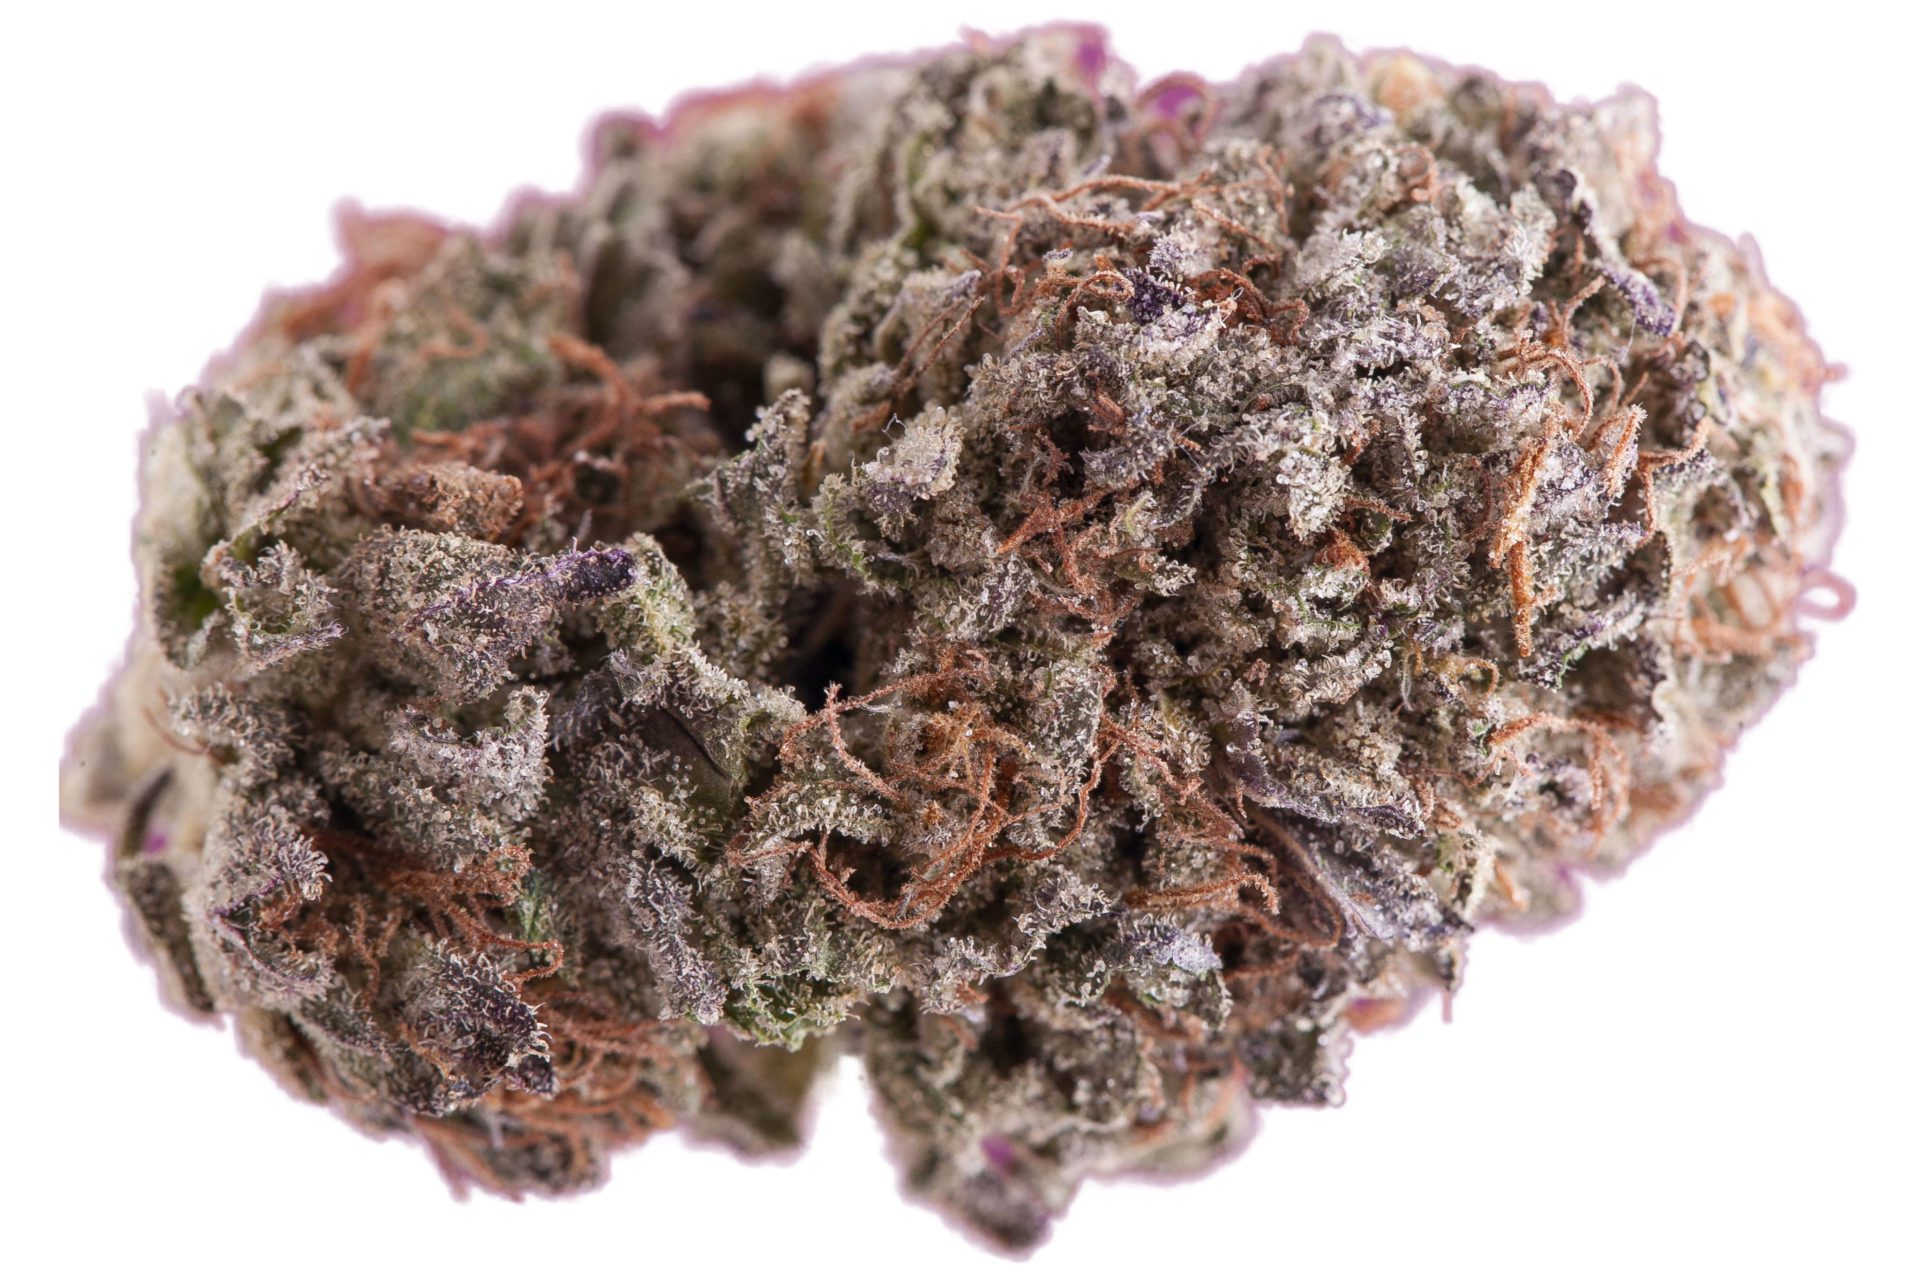 closeup of purple kush marijuana nugget